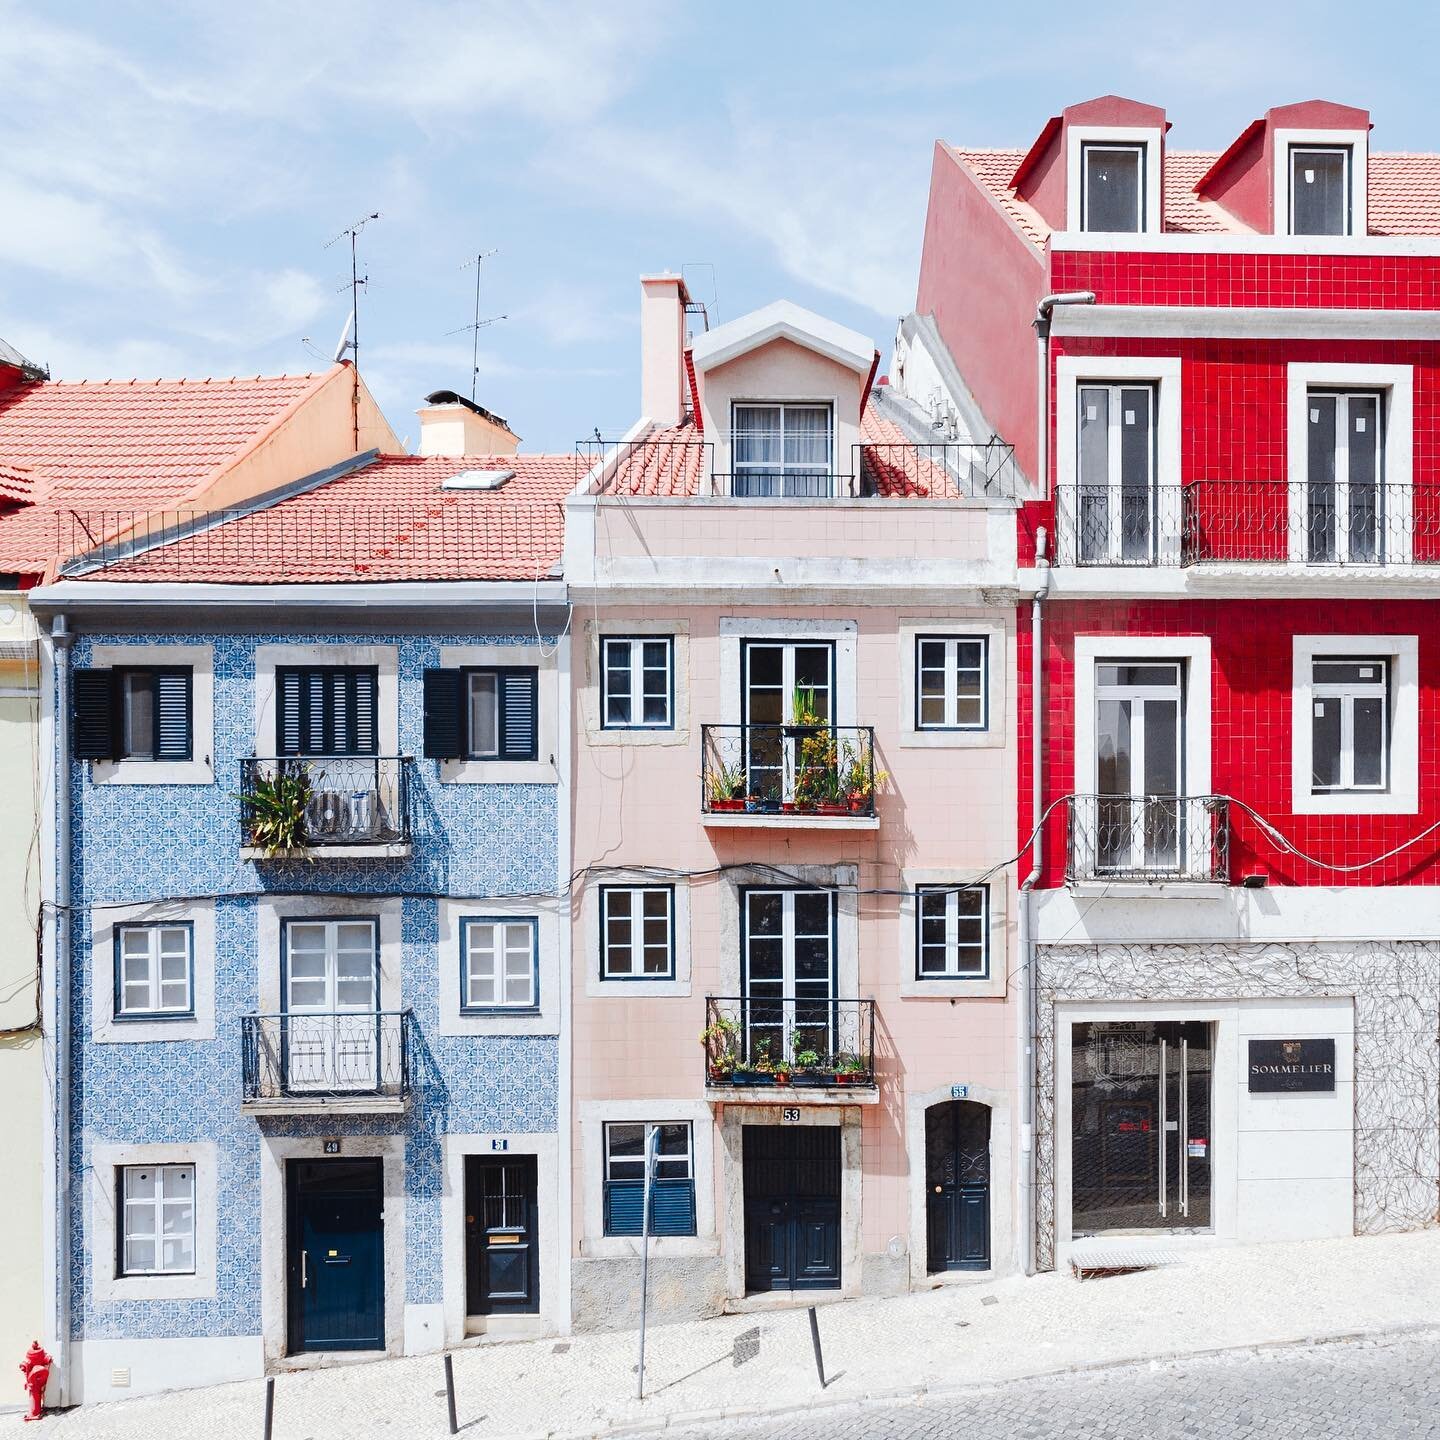 Blue skies and candy-colored homes 🍭 via Hugo Sousa